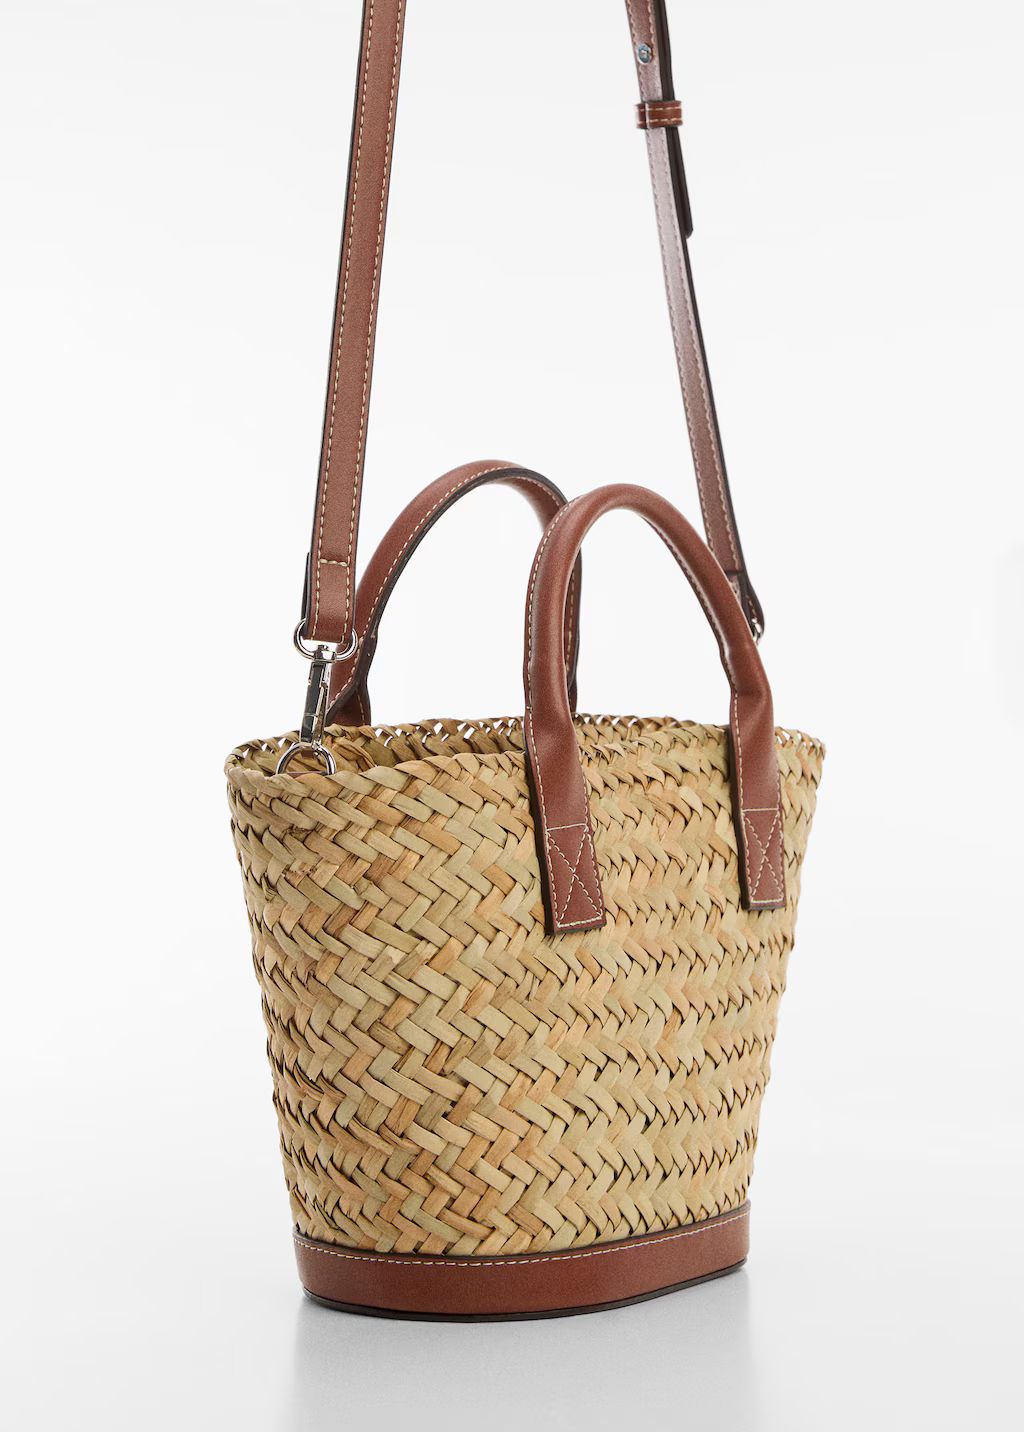 Add to shopping bag Item added to shopping bag | MANGO (US)